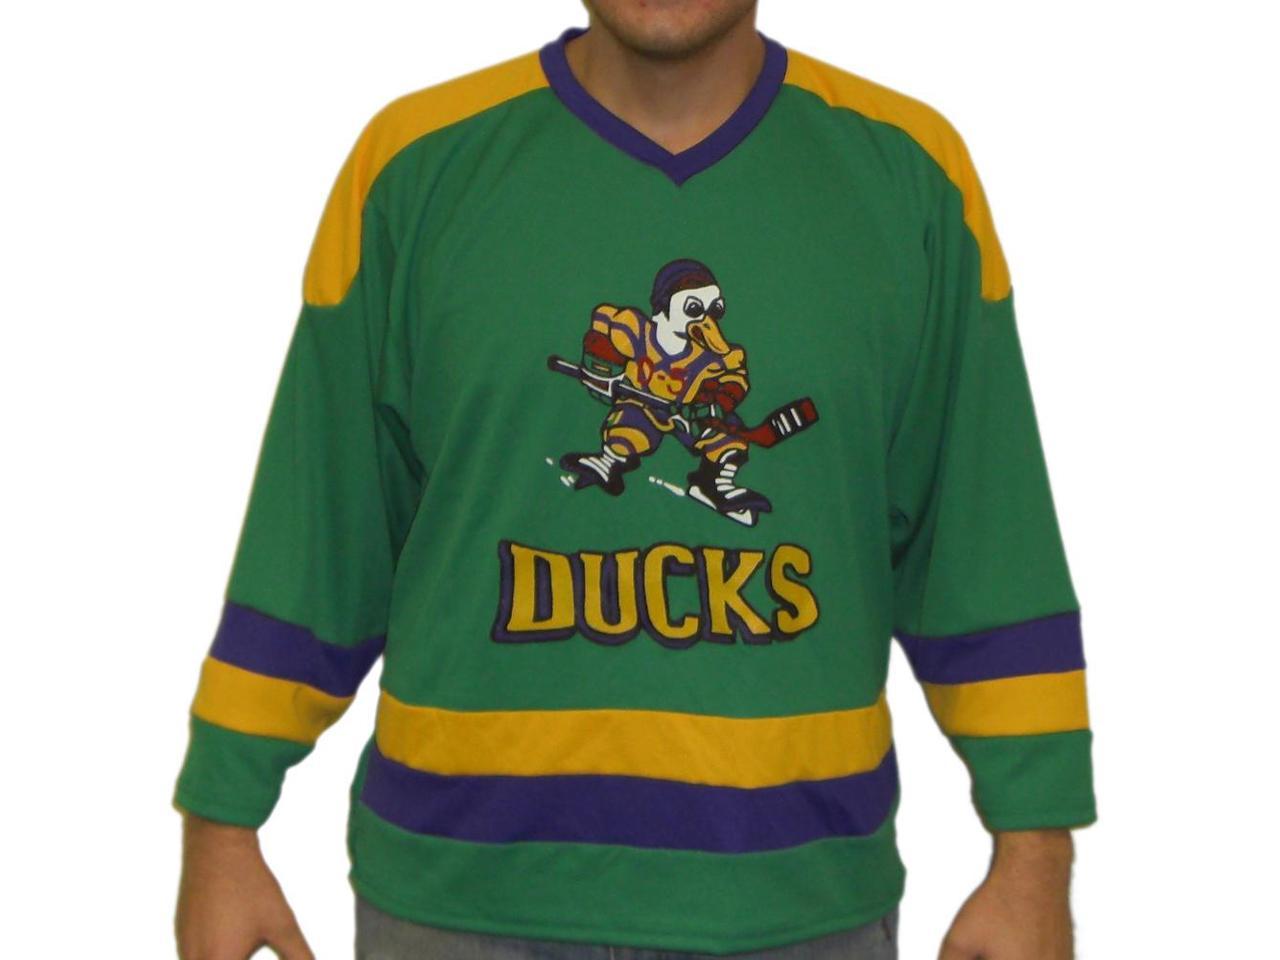 Fulton Reed #44 Mighty Ducks Movie Hockey Jersey Bash Brothers Slap Shot Costume 